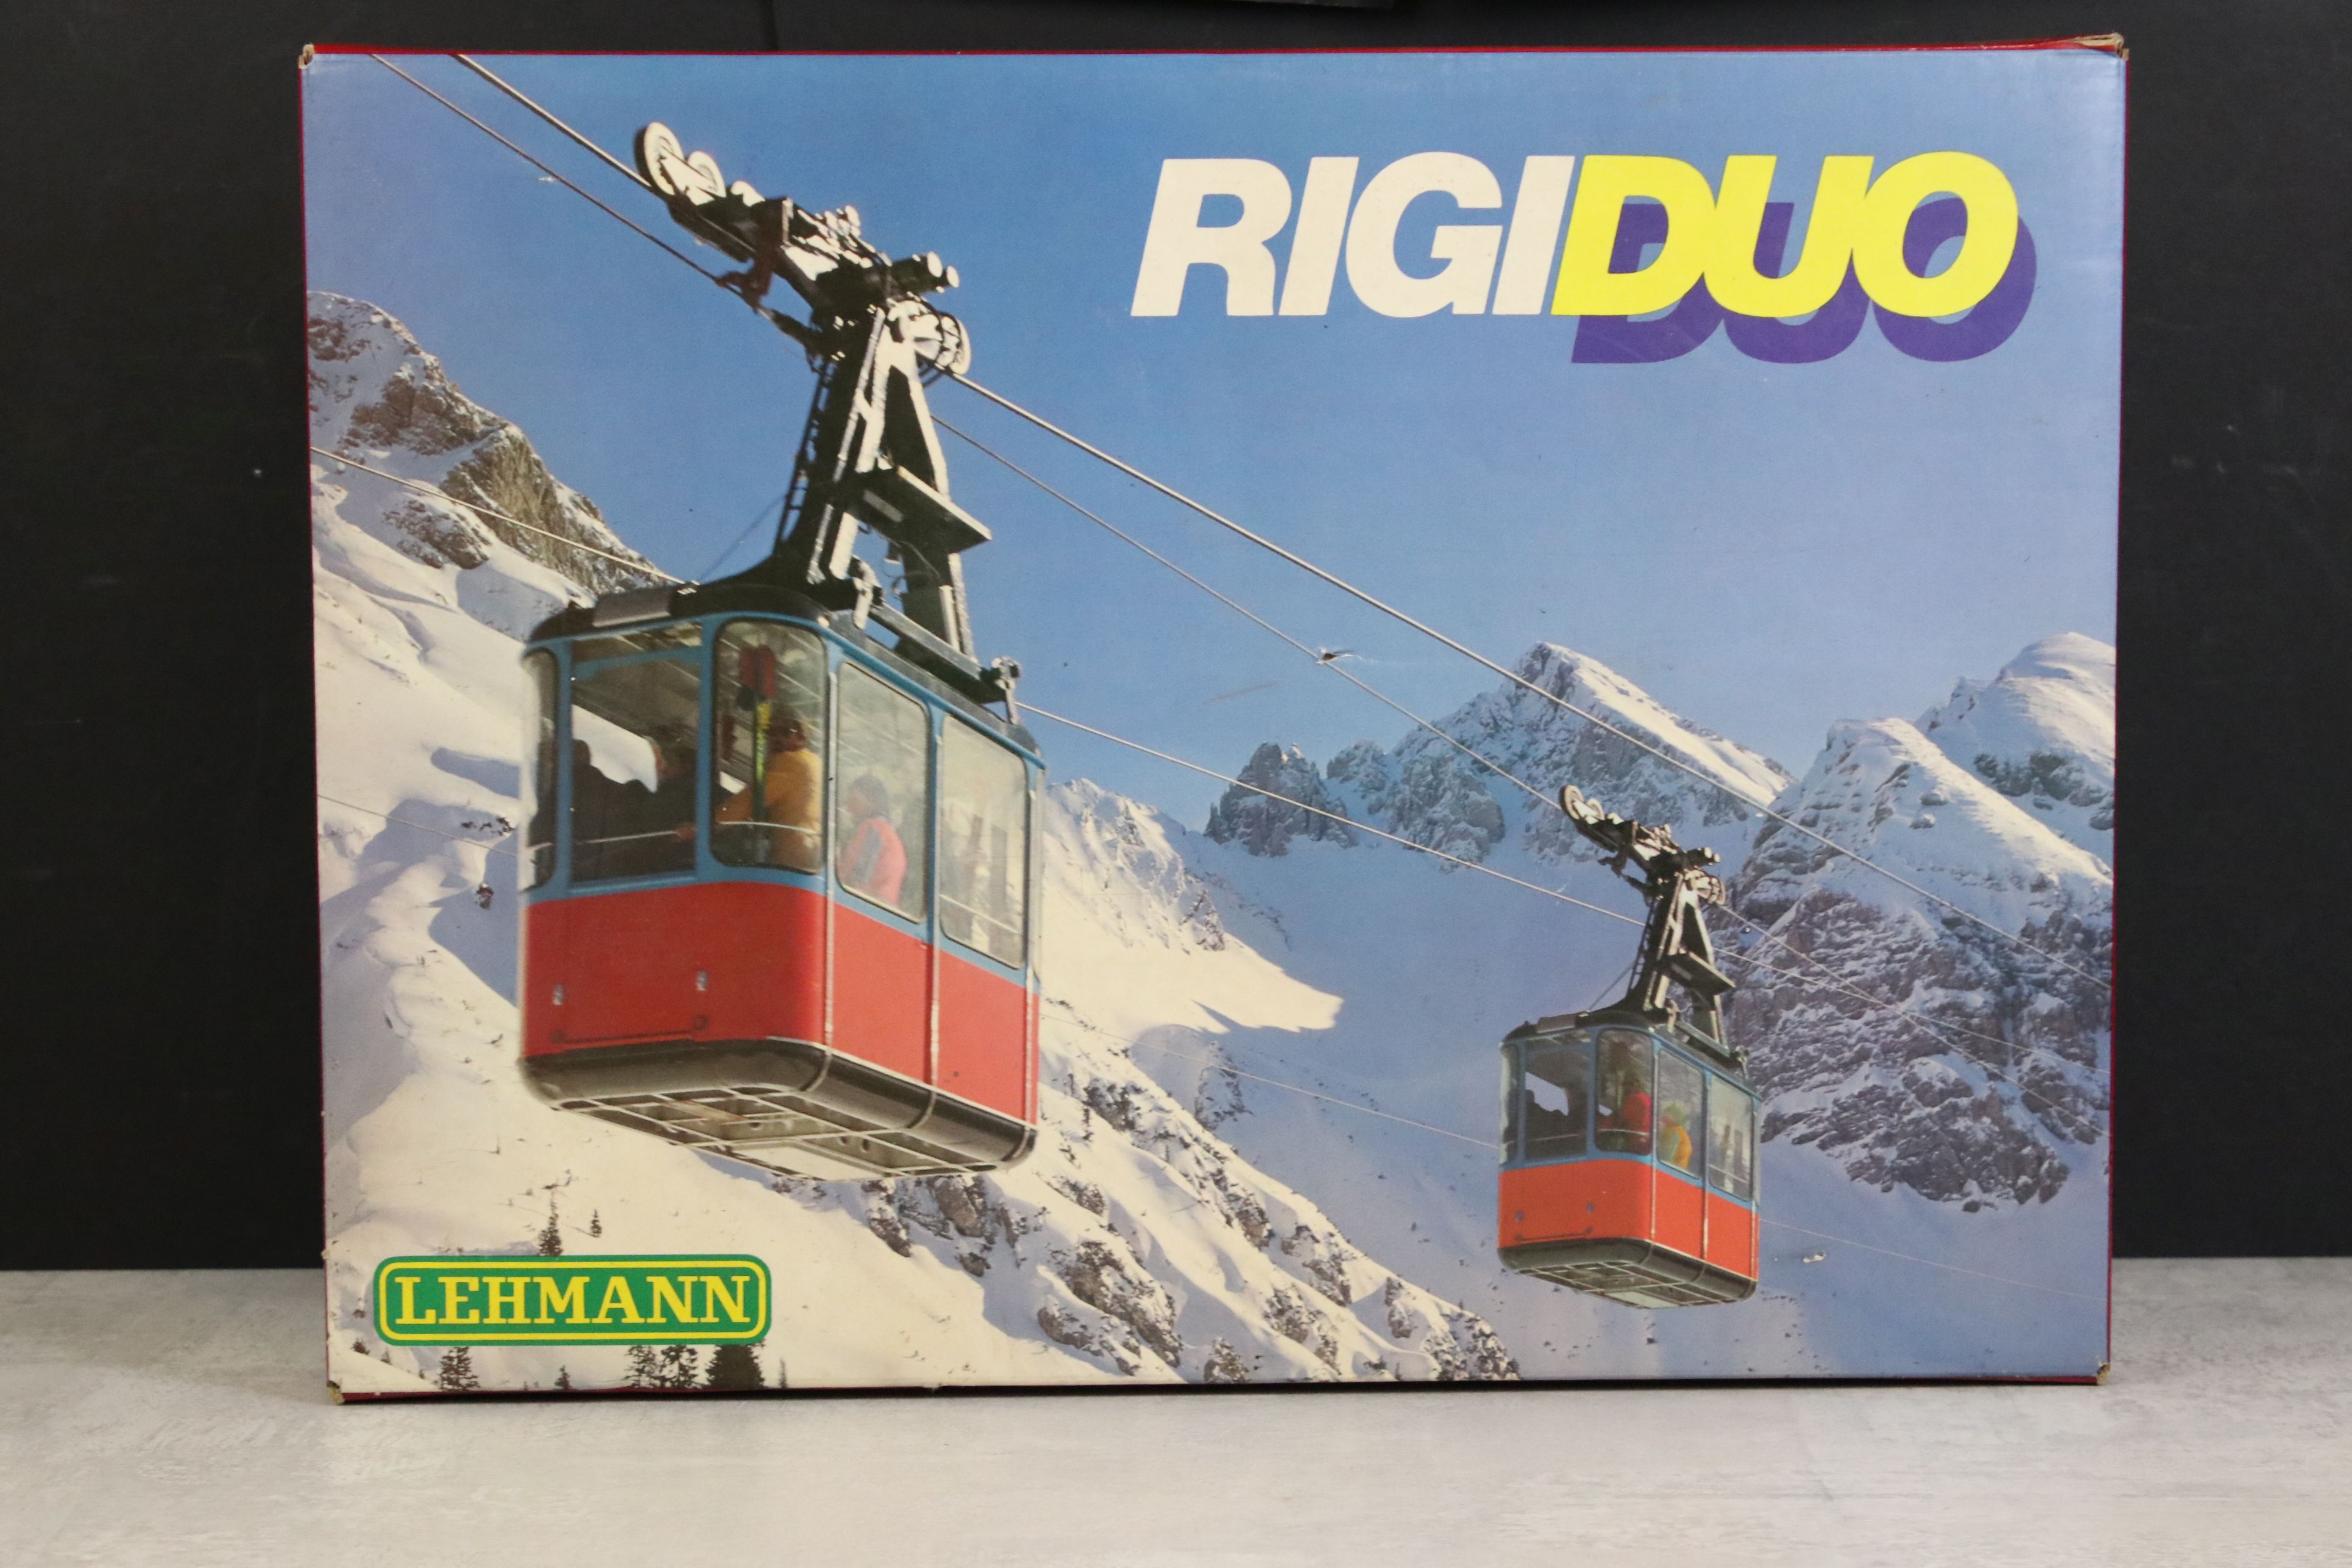 Boxed Lehmann Rigi Duo 9000 tin plate cable car set, appears complete